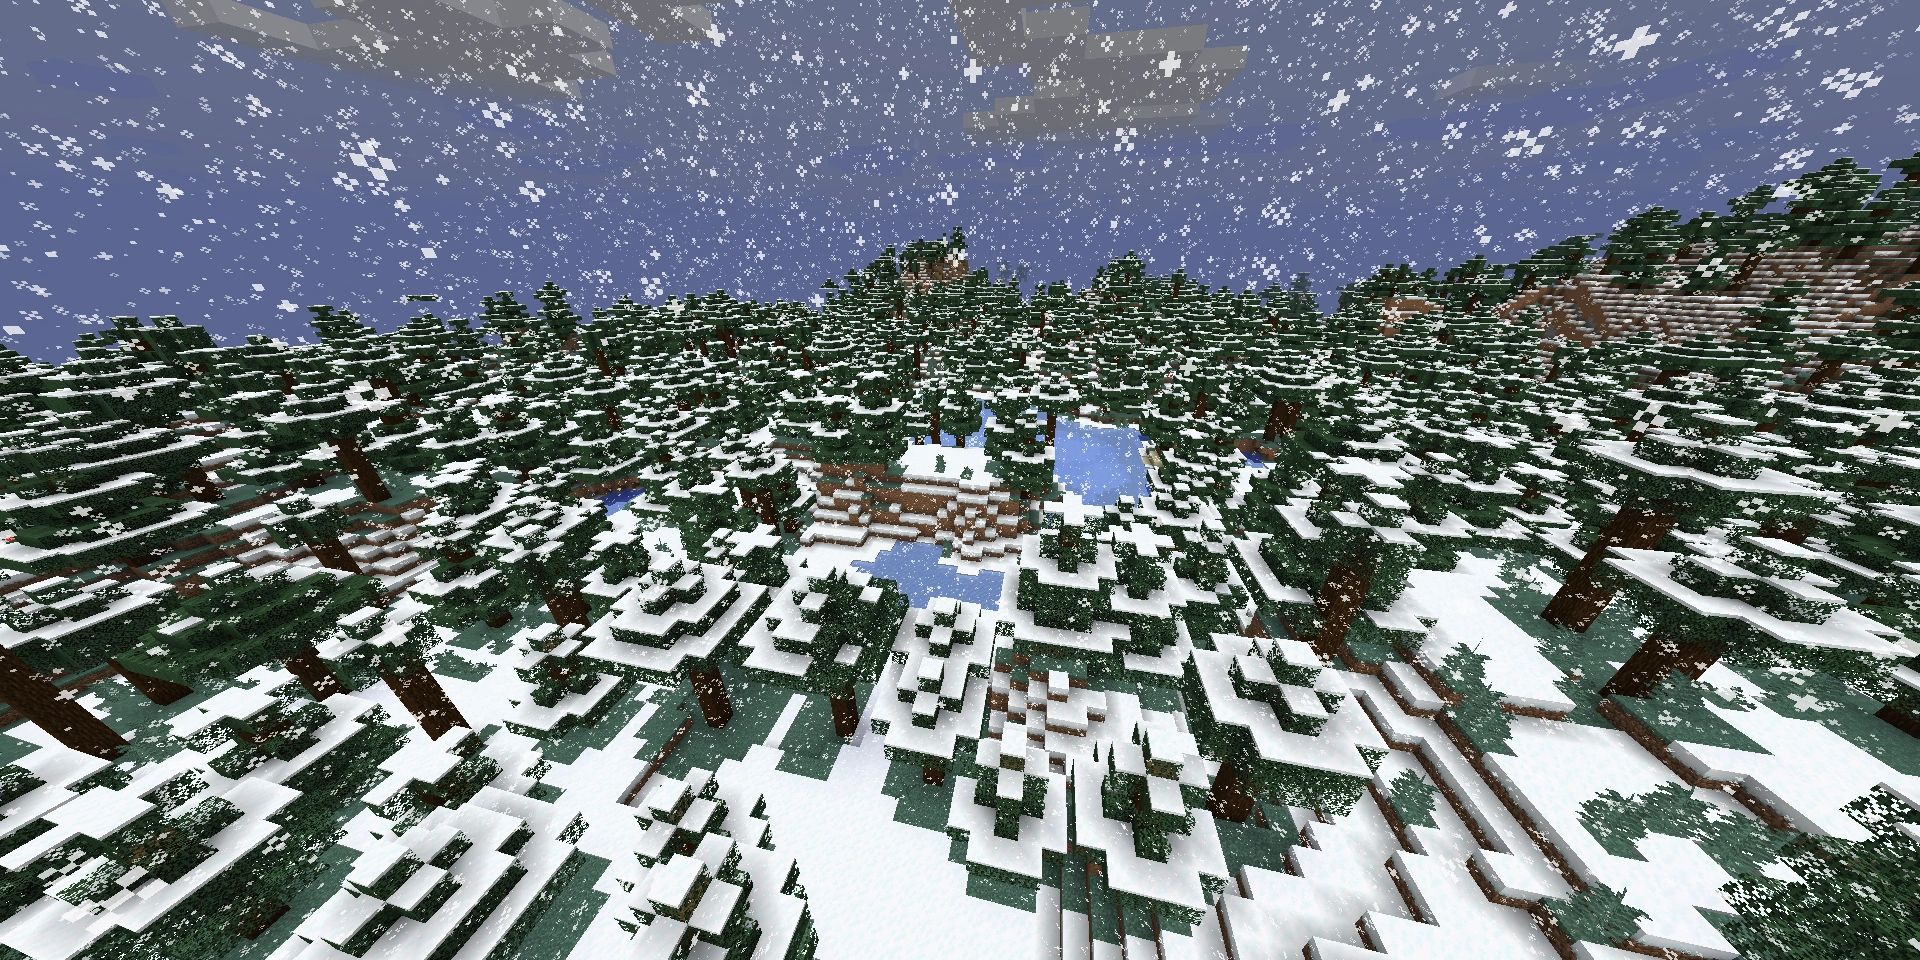 Minecraft snowfall in a tundra.